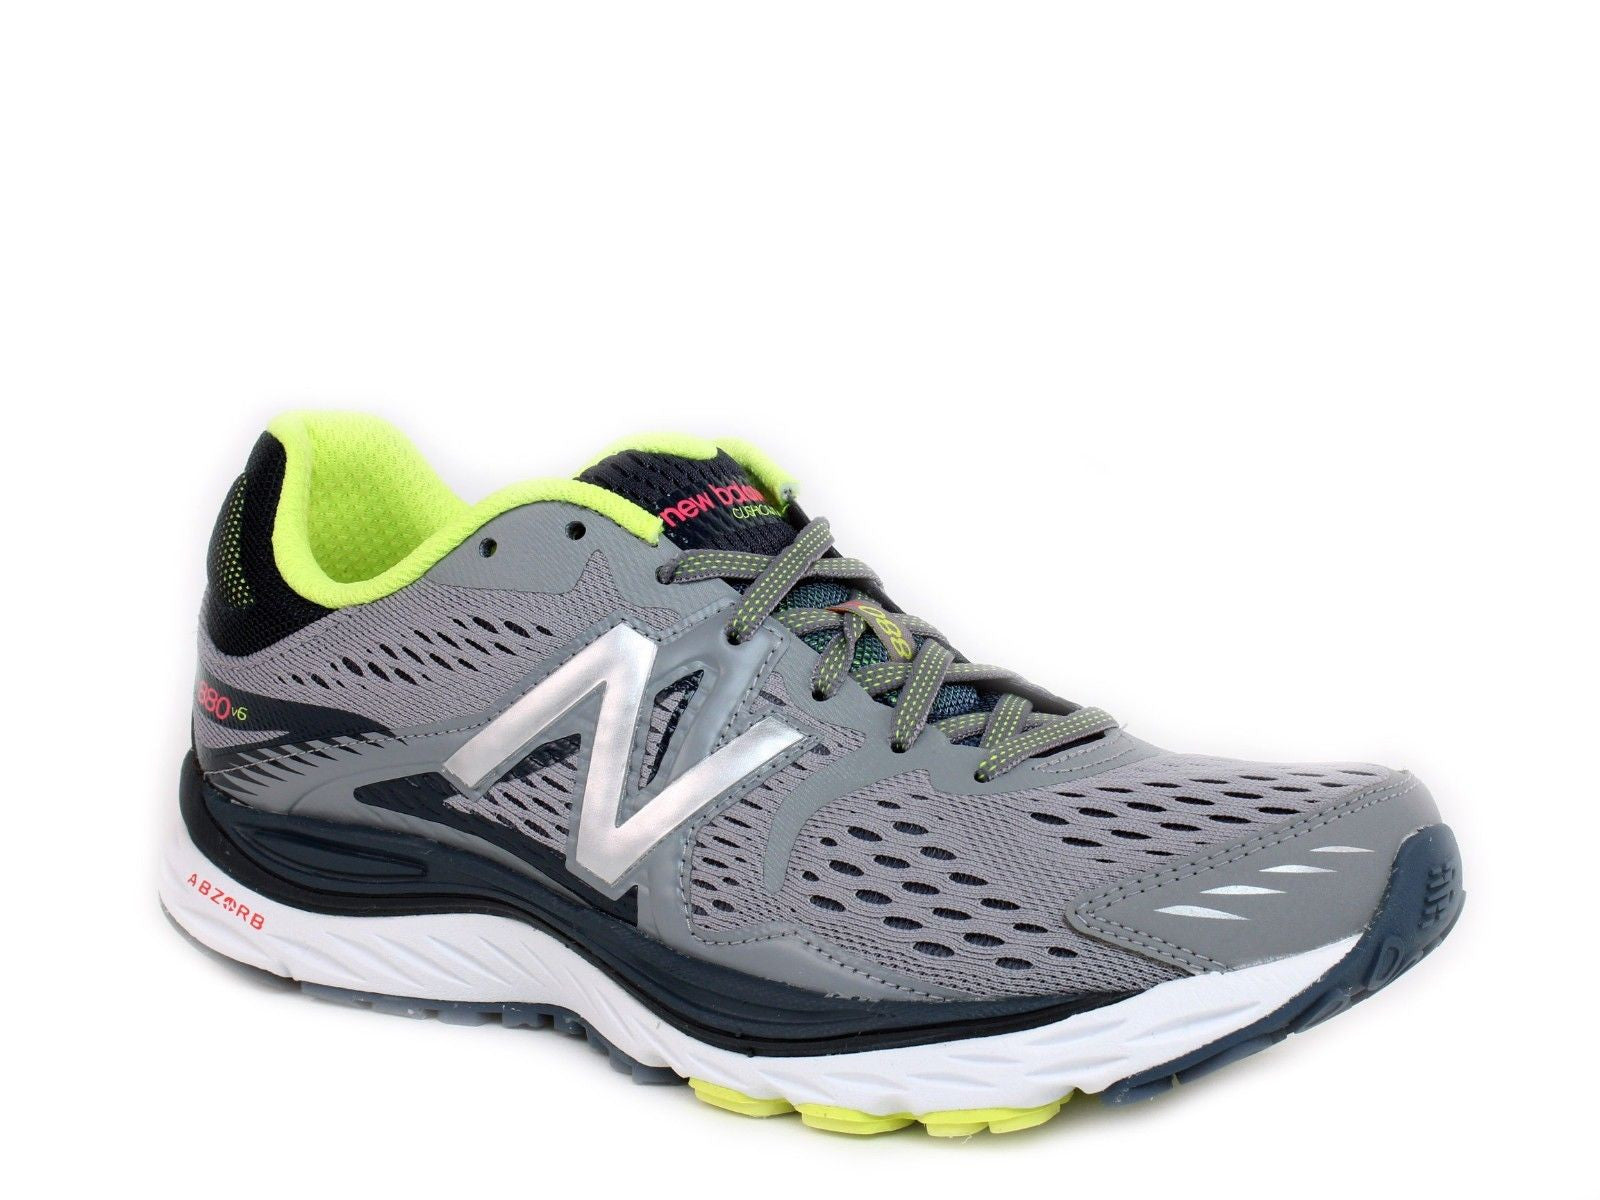 n balance running shoes